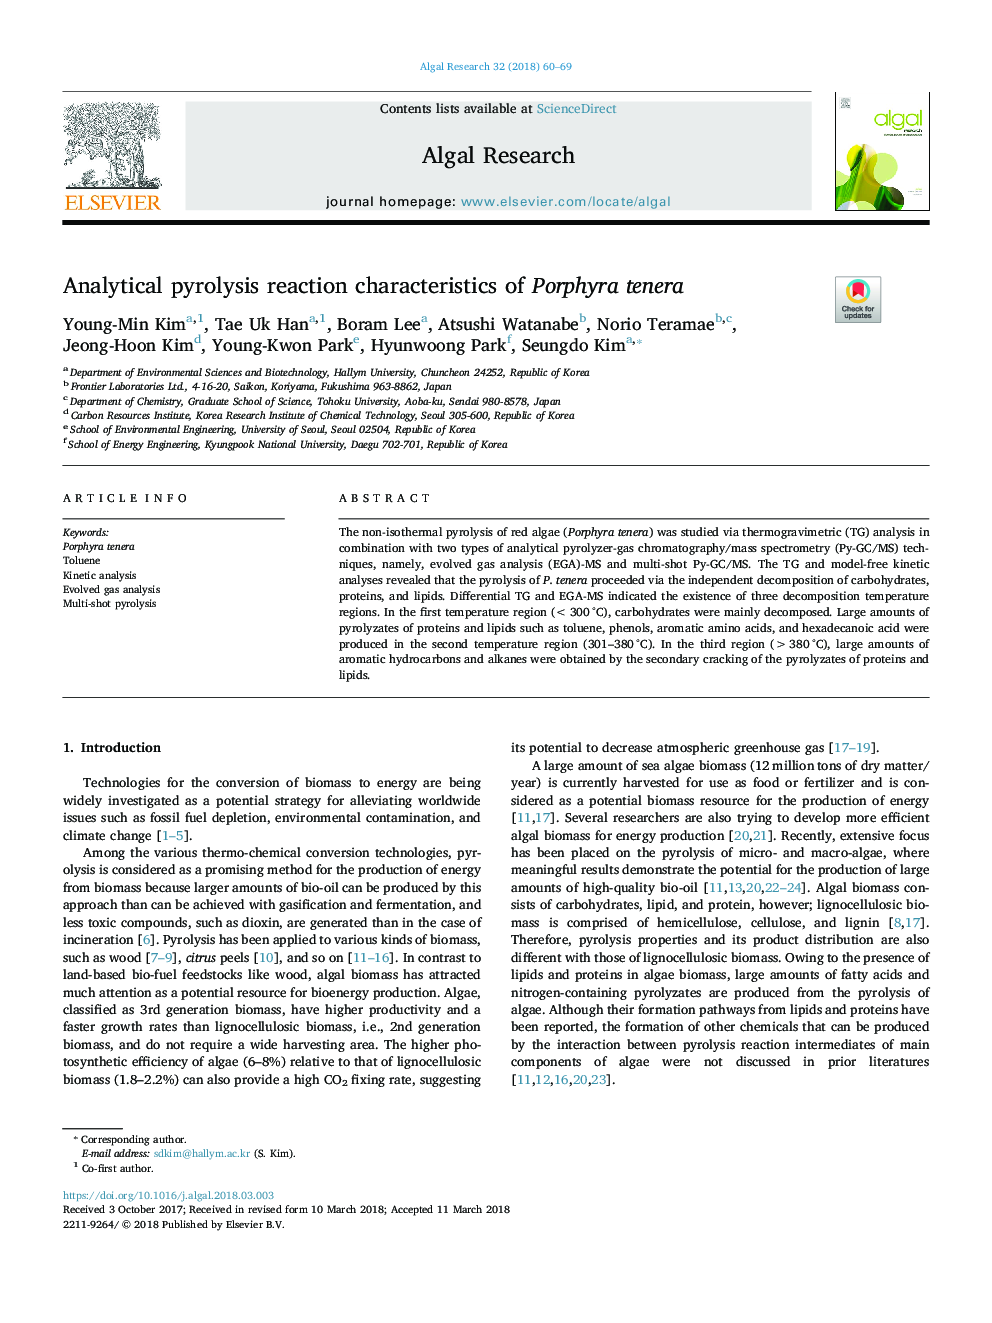 Analytical pyrolysis reaction characteristics of Porphyra tenera